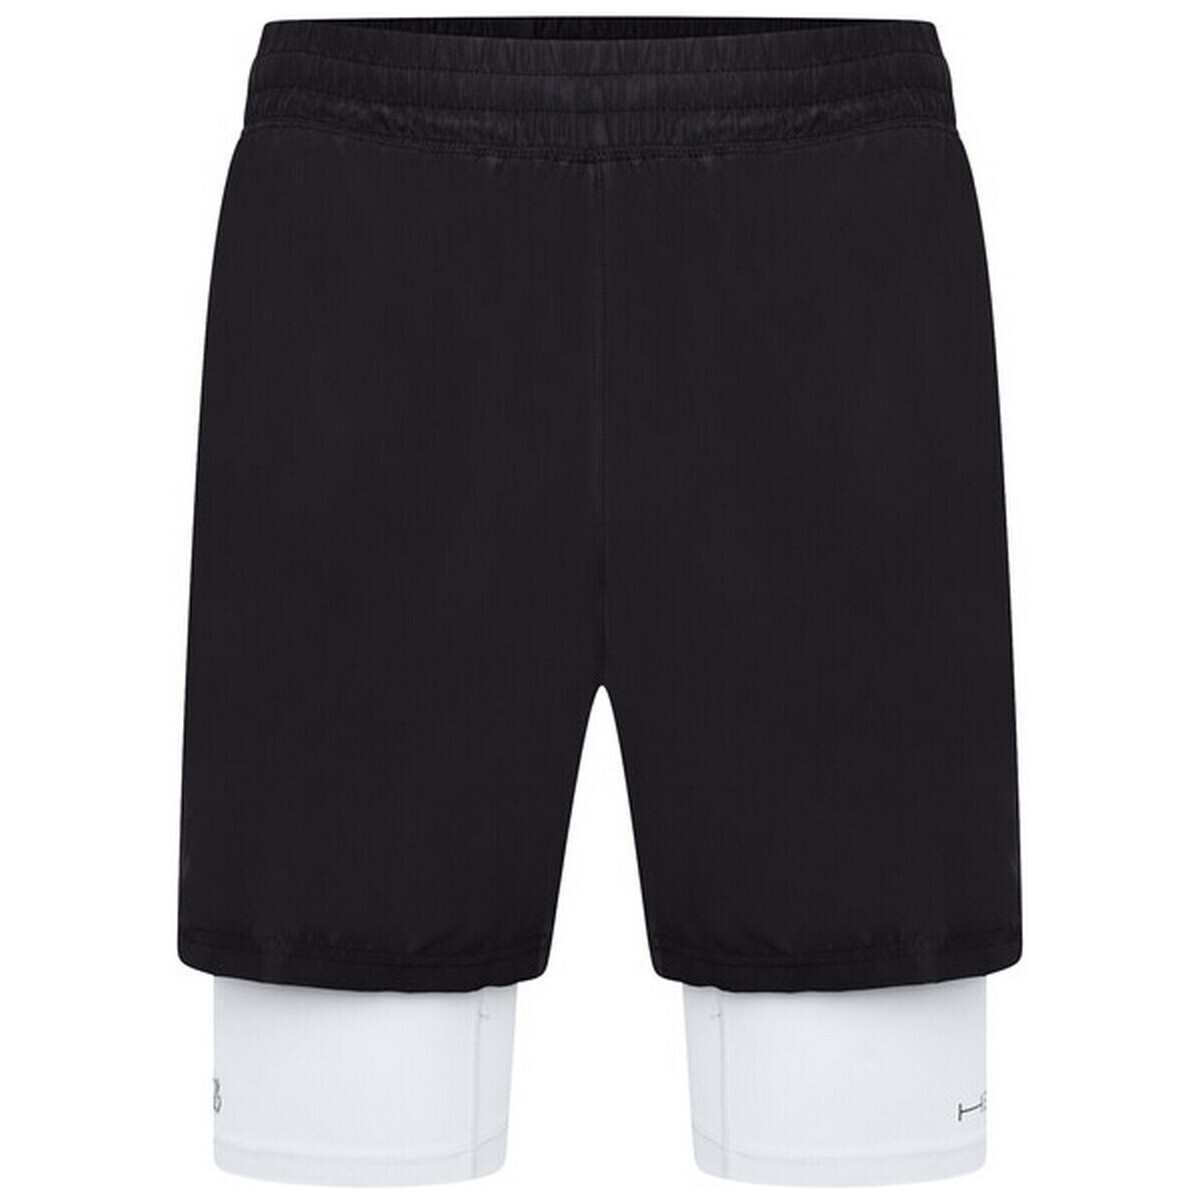 Vêtements Homme Shorts / Bermudas Dare 2b Henry Holland Psych Up Blanc